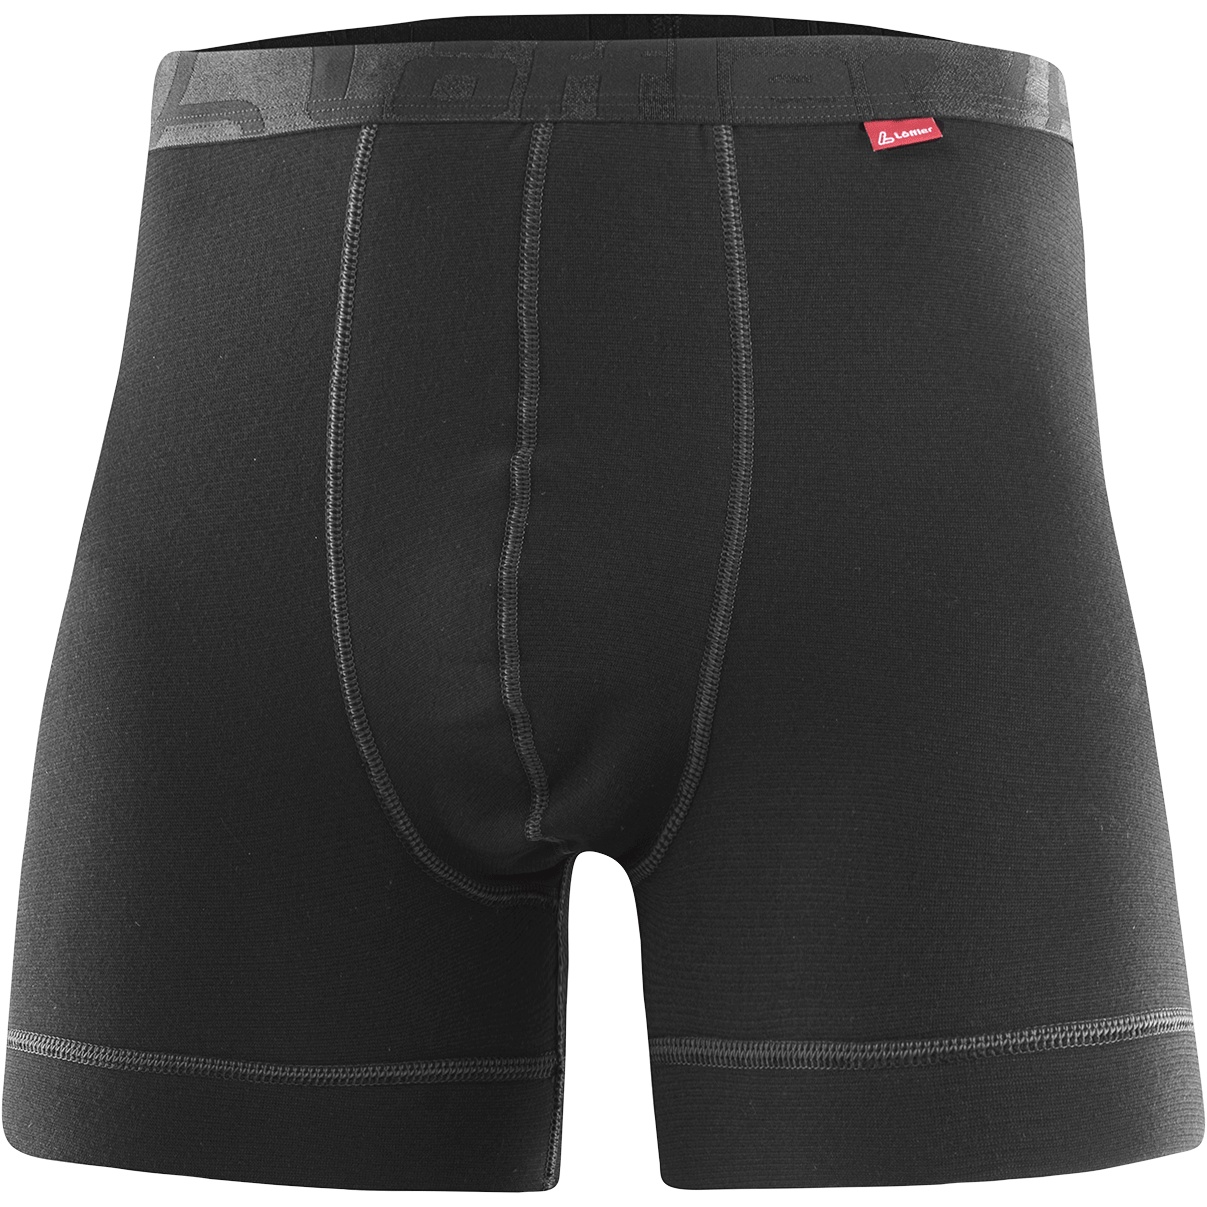 Picture of Löffler Transtex® Warm Boxershorts Men - black 990